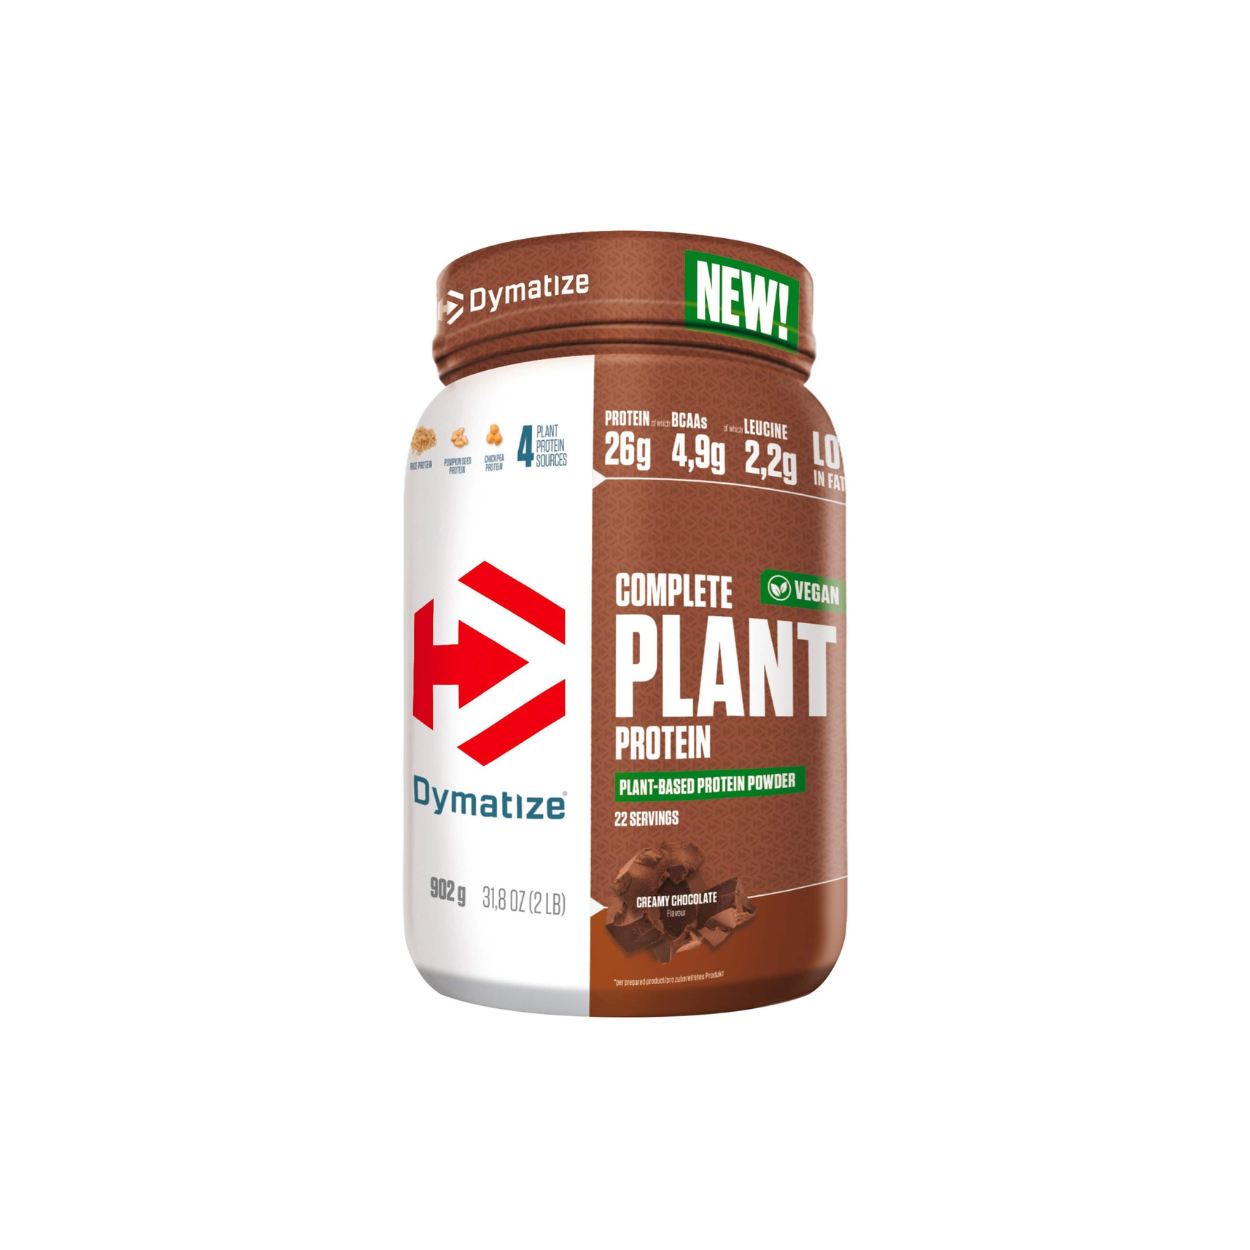 Dymatize Complete Plant Protein Vegan Creamy Chocolate